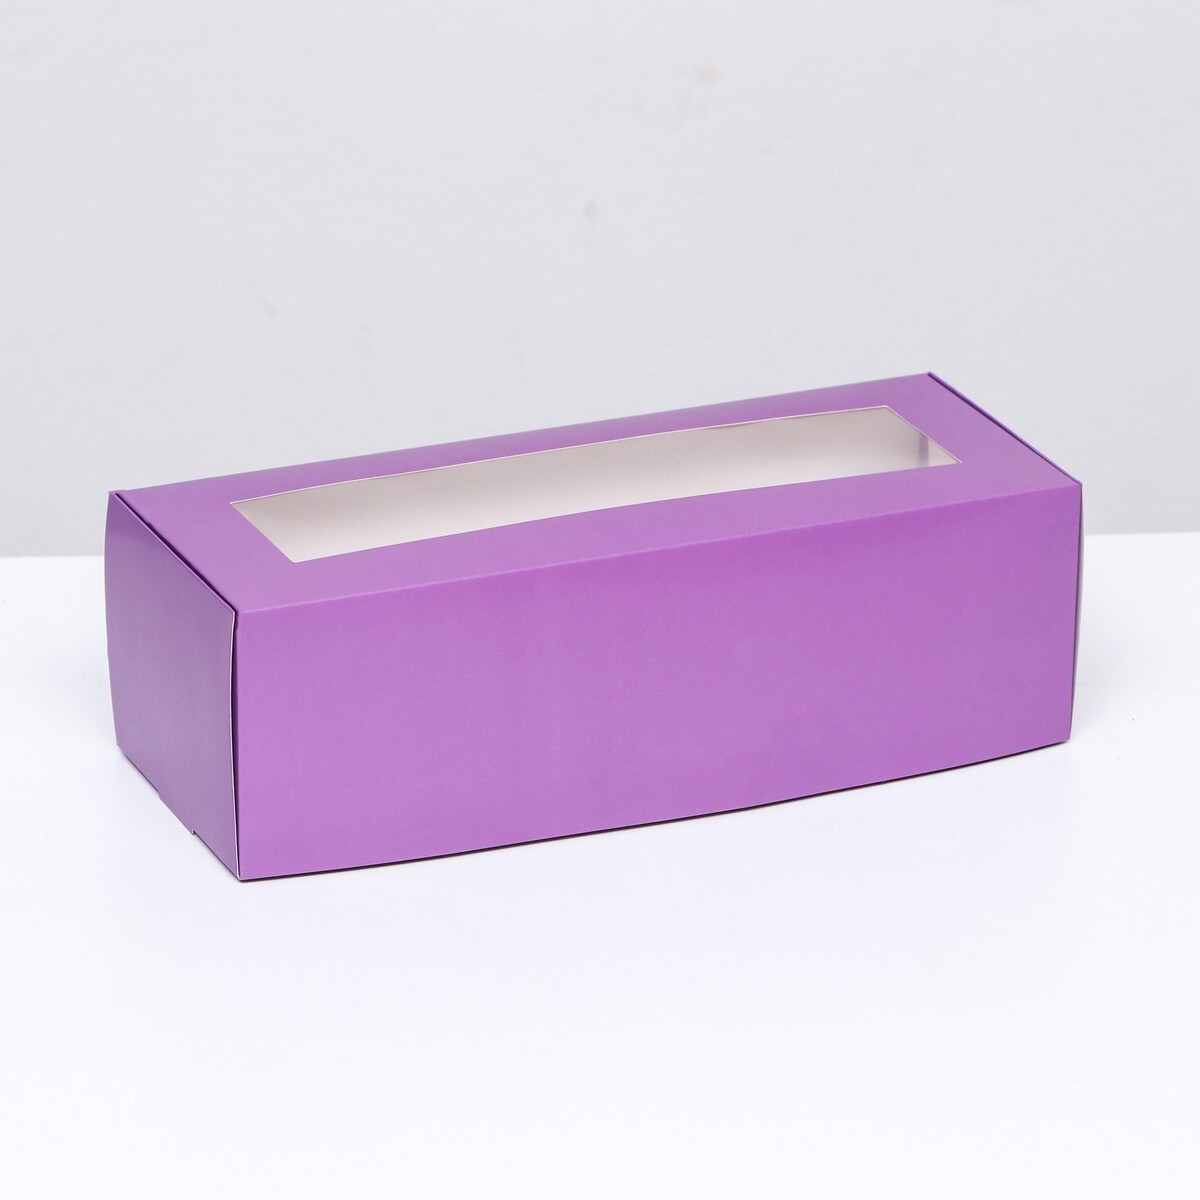 Коробка складная с окном под рулет, сиреневая, 26 х 10 х 8 см коробка под рулет с ручками белая 27 5 х 11 х 10 см